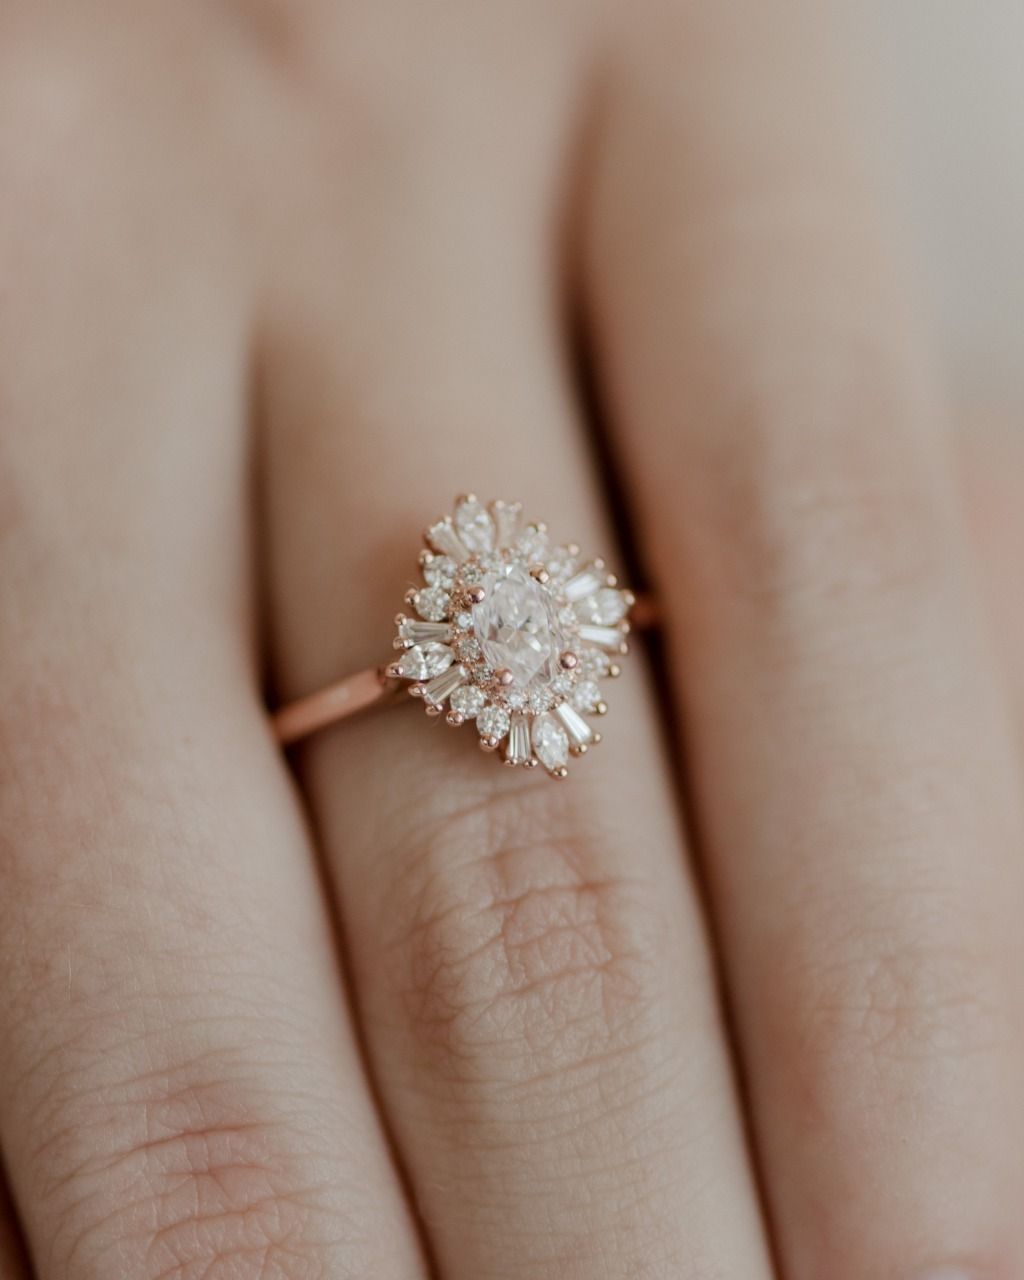 Unique Vintage Style Engagement Ring From Evorden Wcvendor